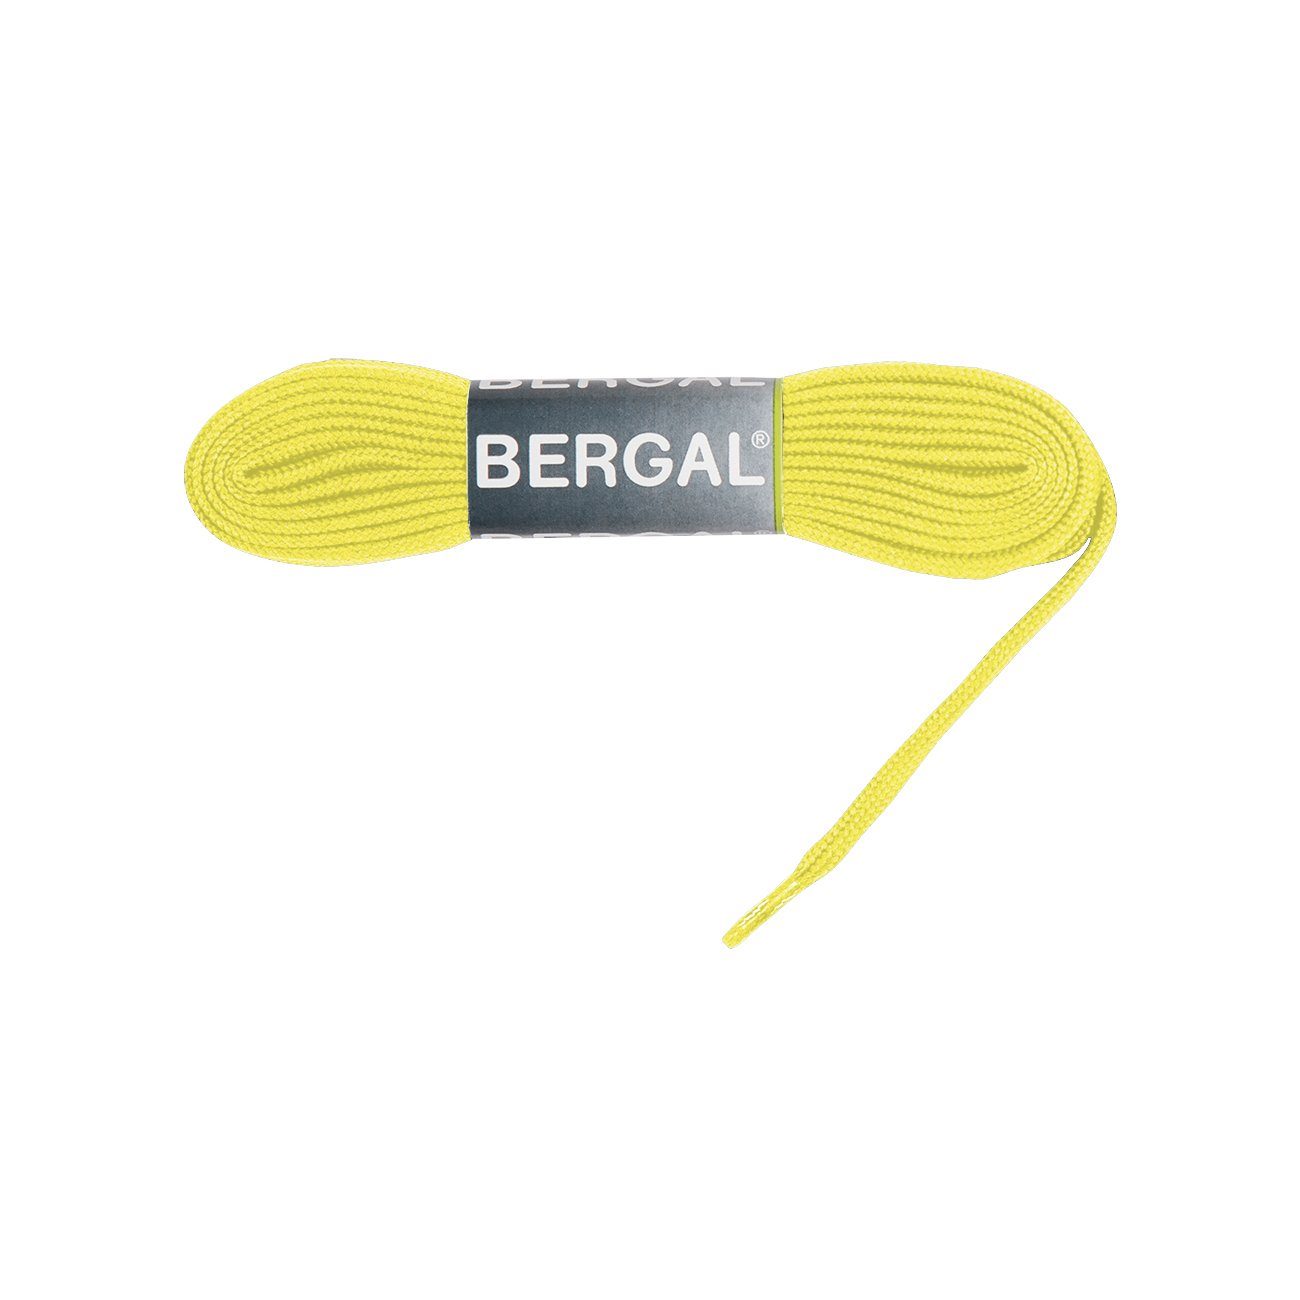 Bergal Schnürsenkel Sneaker Laces - Flach - 10 mm Breit Neongelb | Schnürsenkel